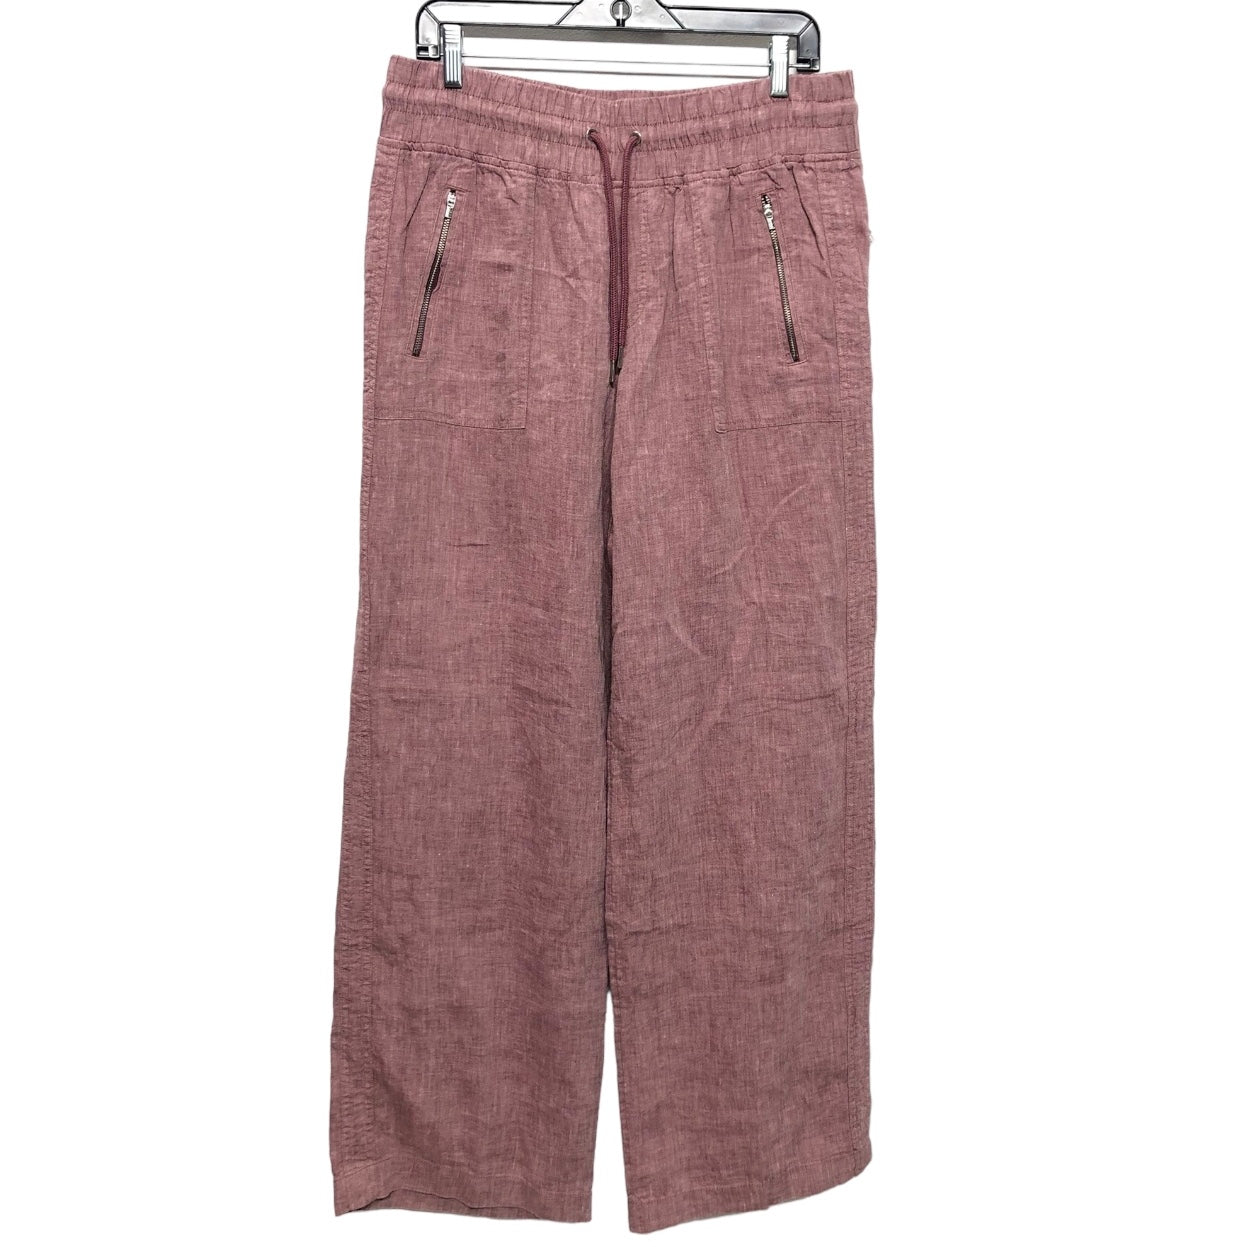 Brown & Pink Pants Linen Athleta, Size 14